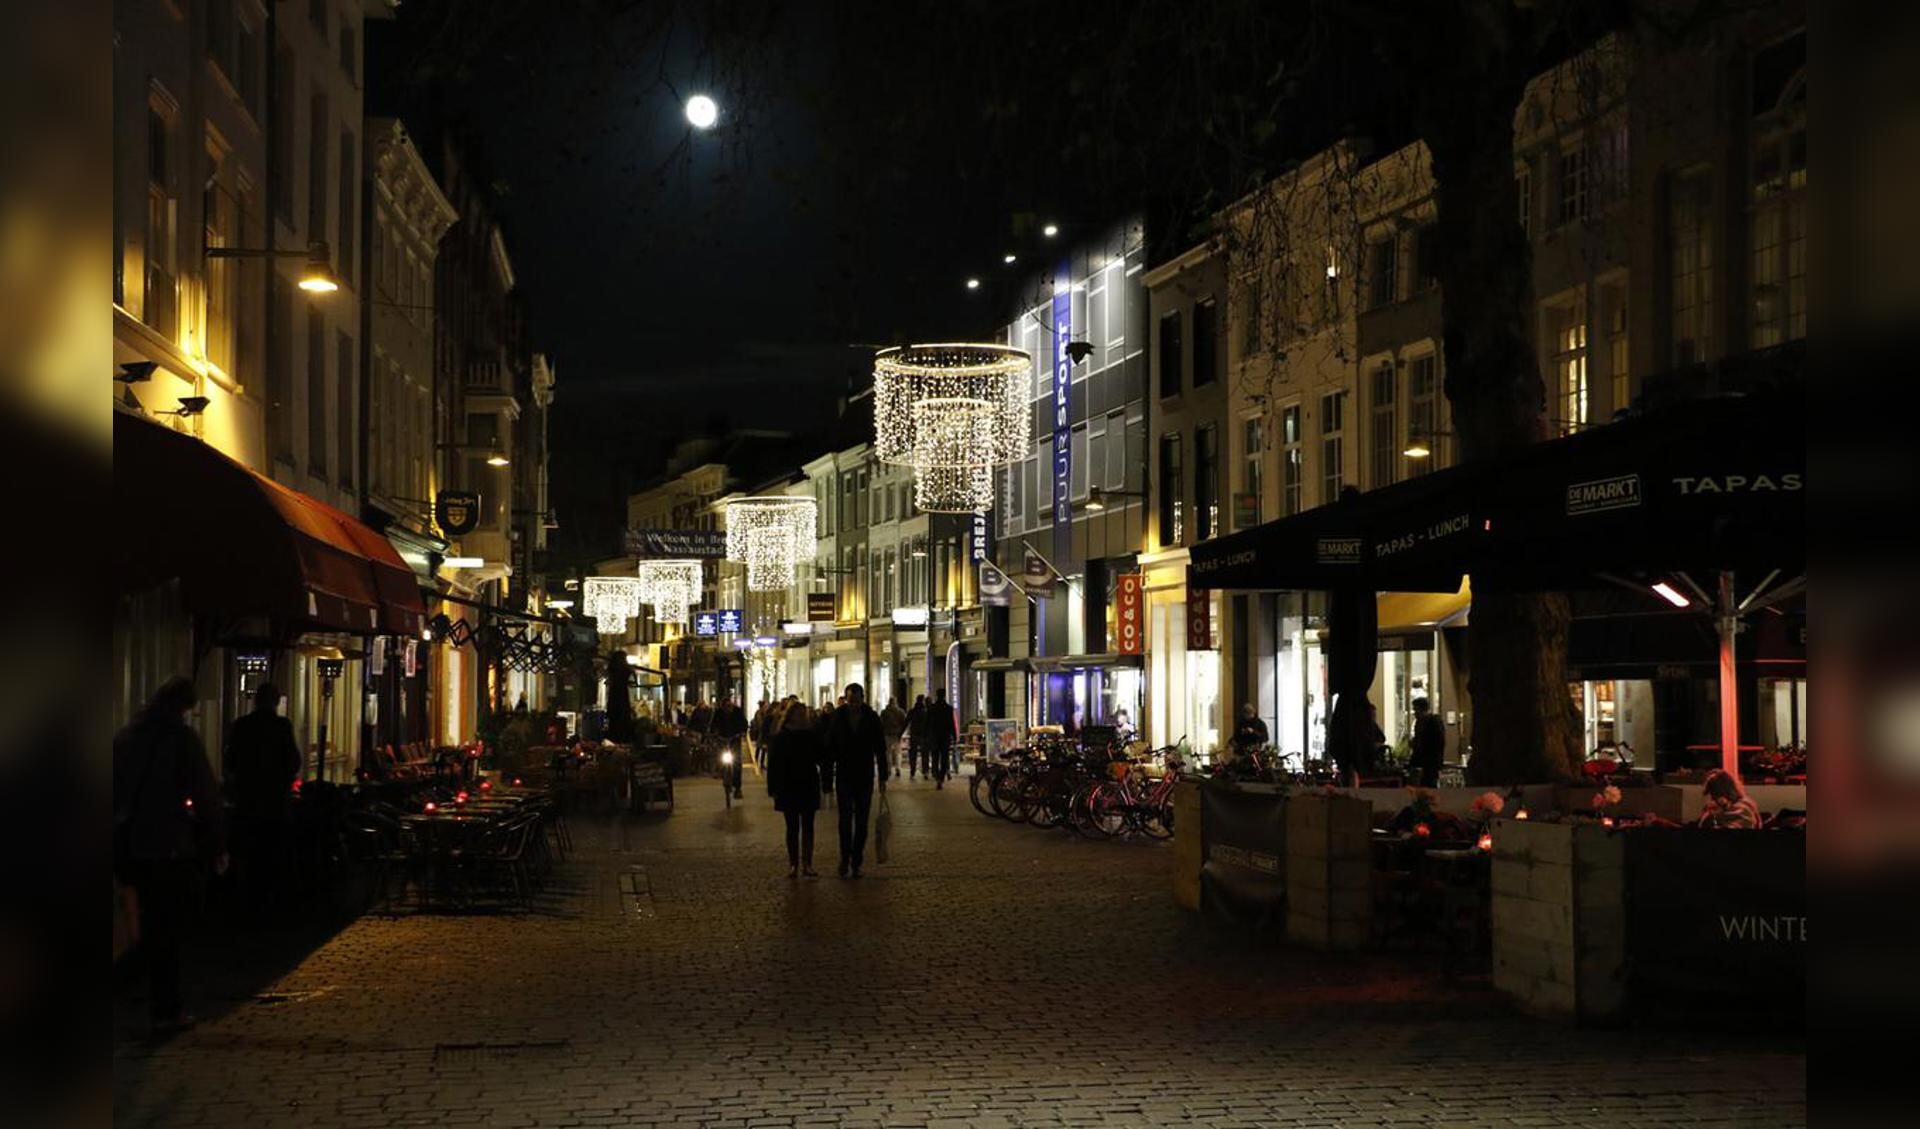 De Bredase binnenstad is dezer dagen feestelijk verlicht.